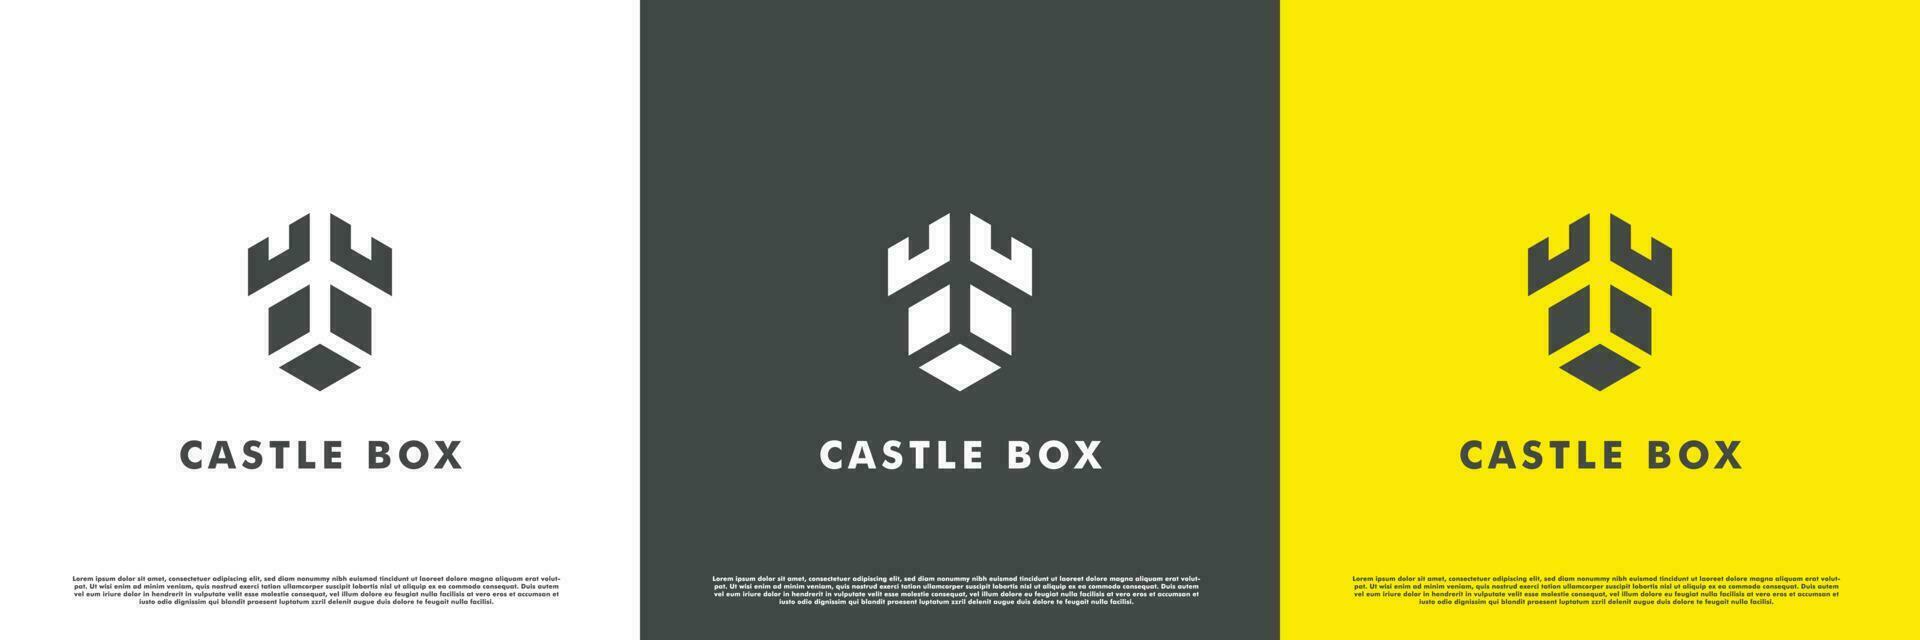 Castle box logo design illustration. Silhouette cardboard box castle tower brick guild kingdom kingdom. Simple medieval building vintage modern icon template. Perfect for web or app icons. vector